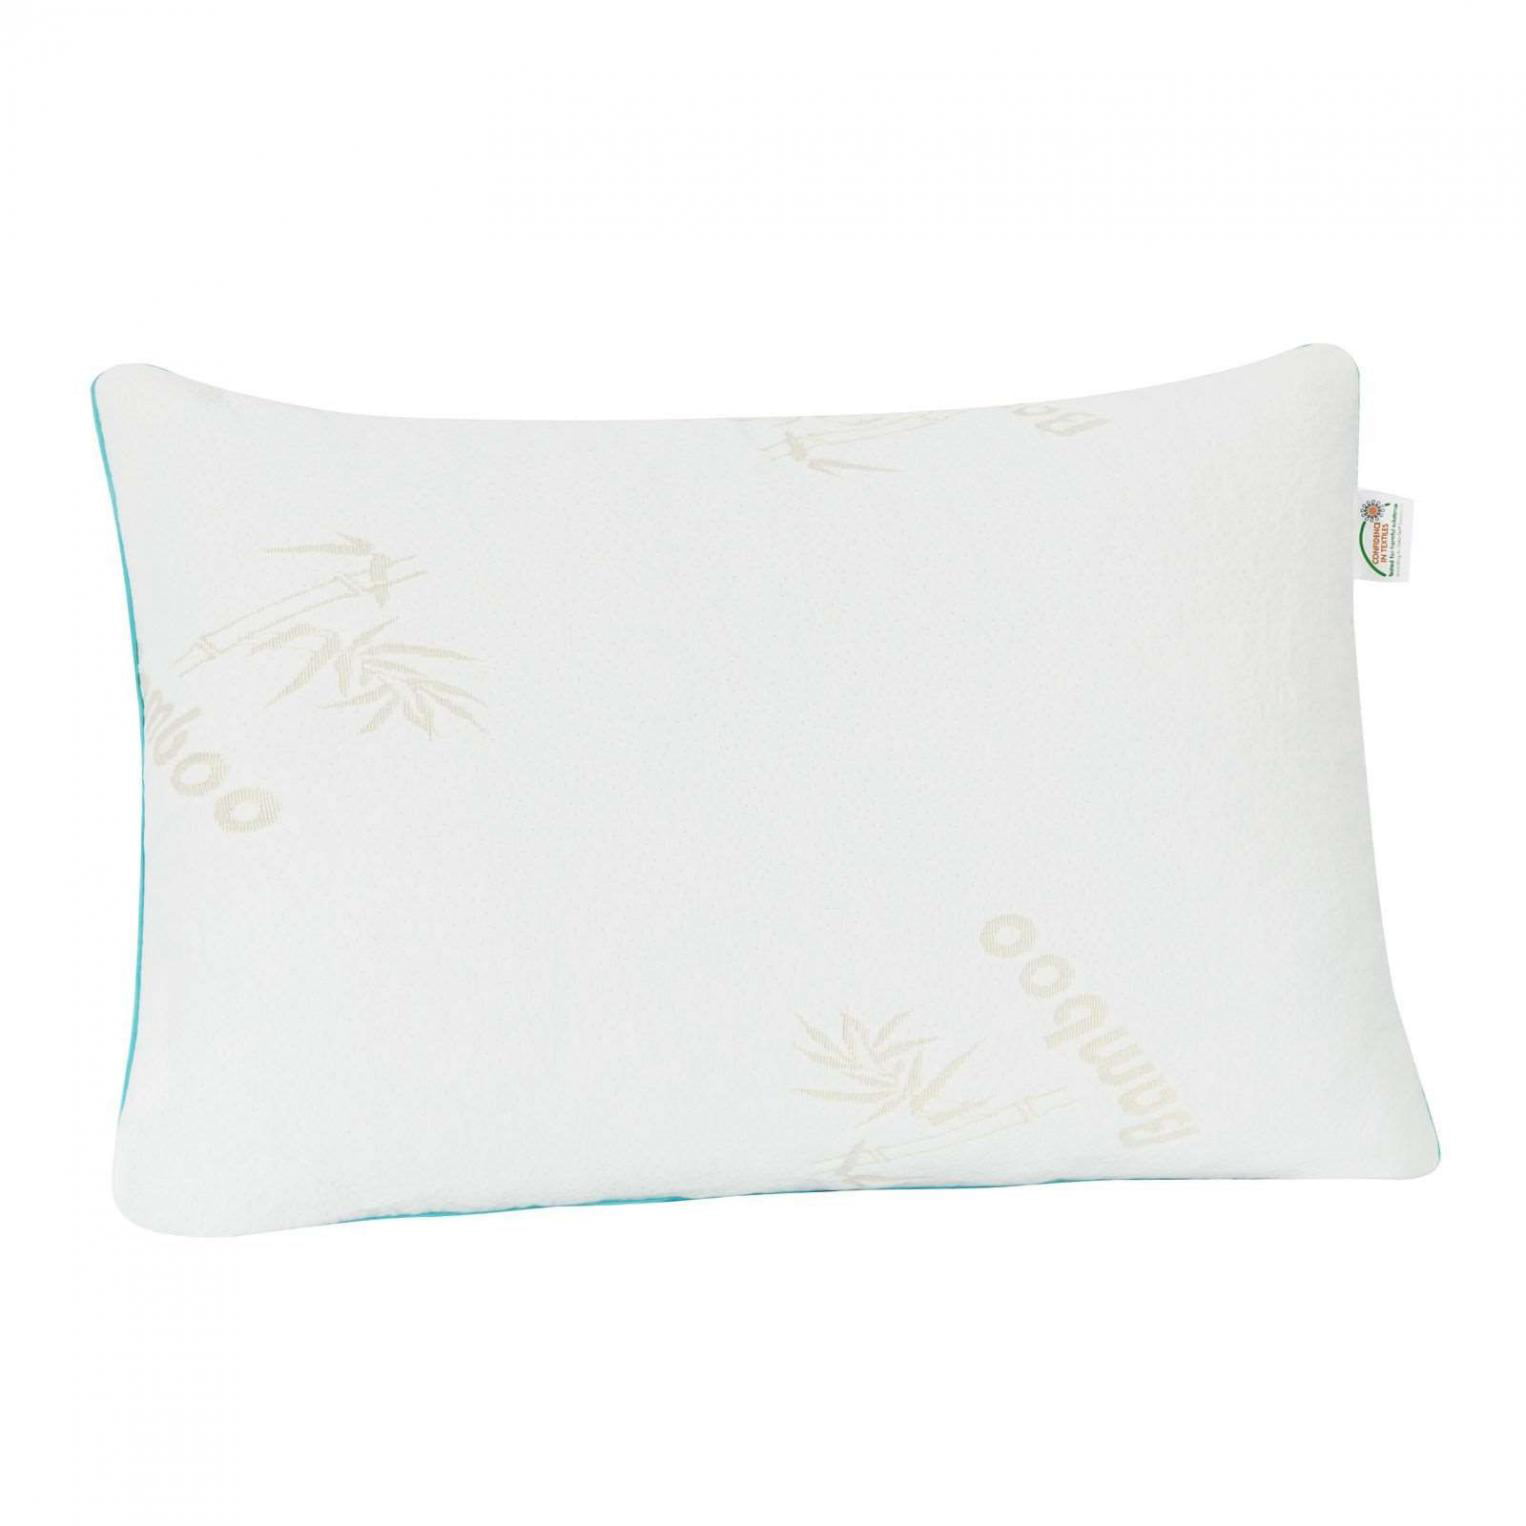 Anti-Bacterial Premium Support Pillow 70x40cm Luxury Bamboo Memory Foam Pillow 